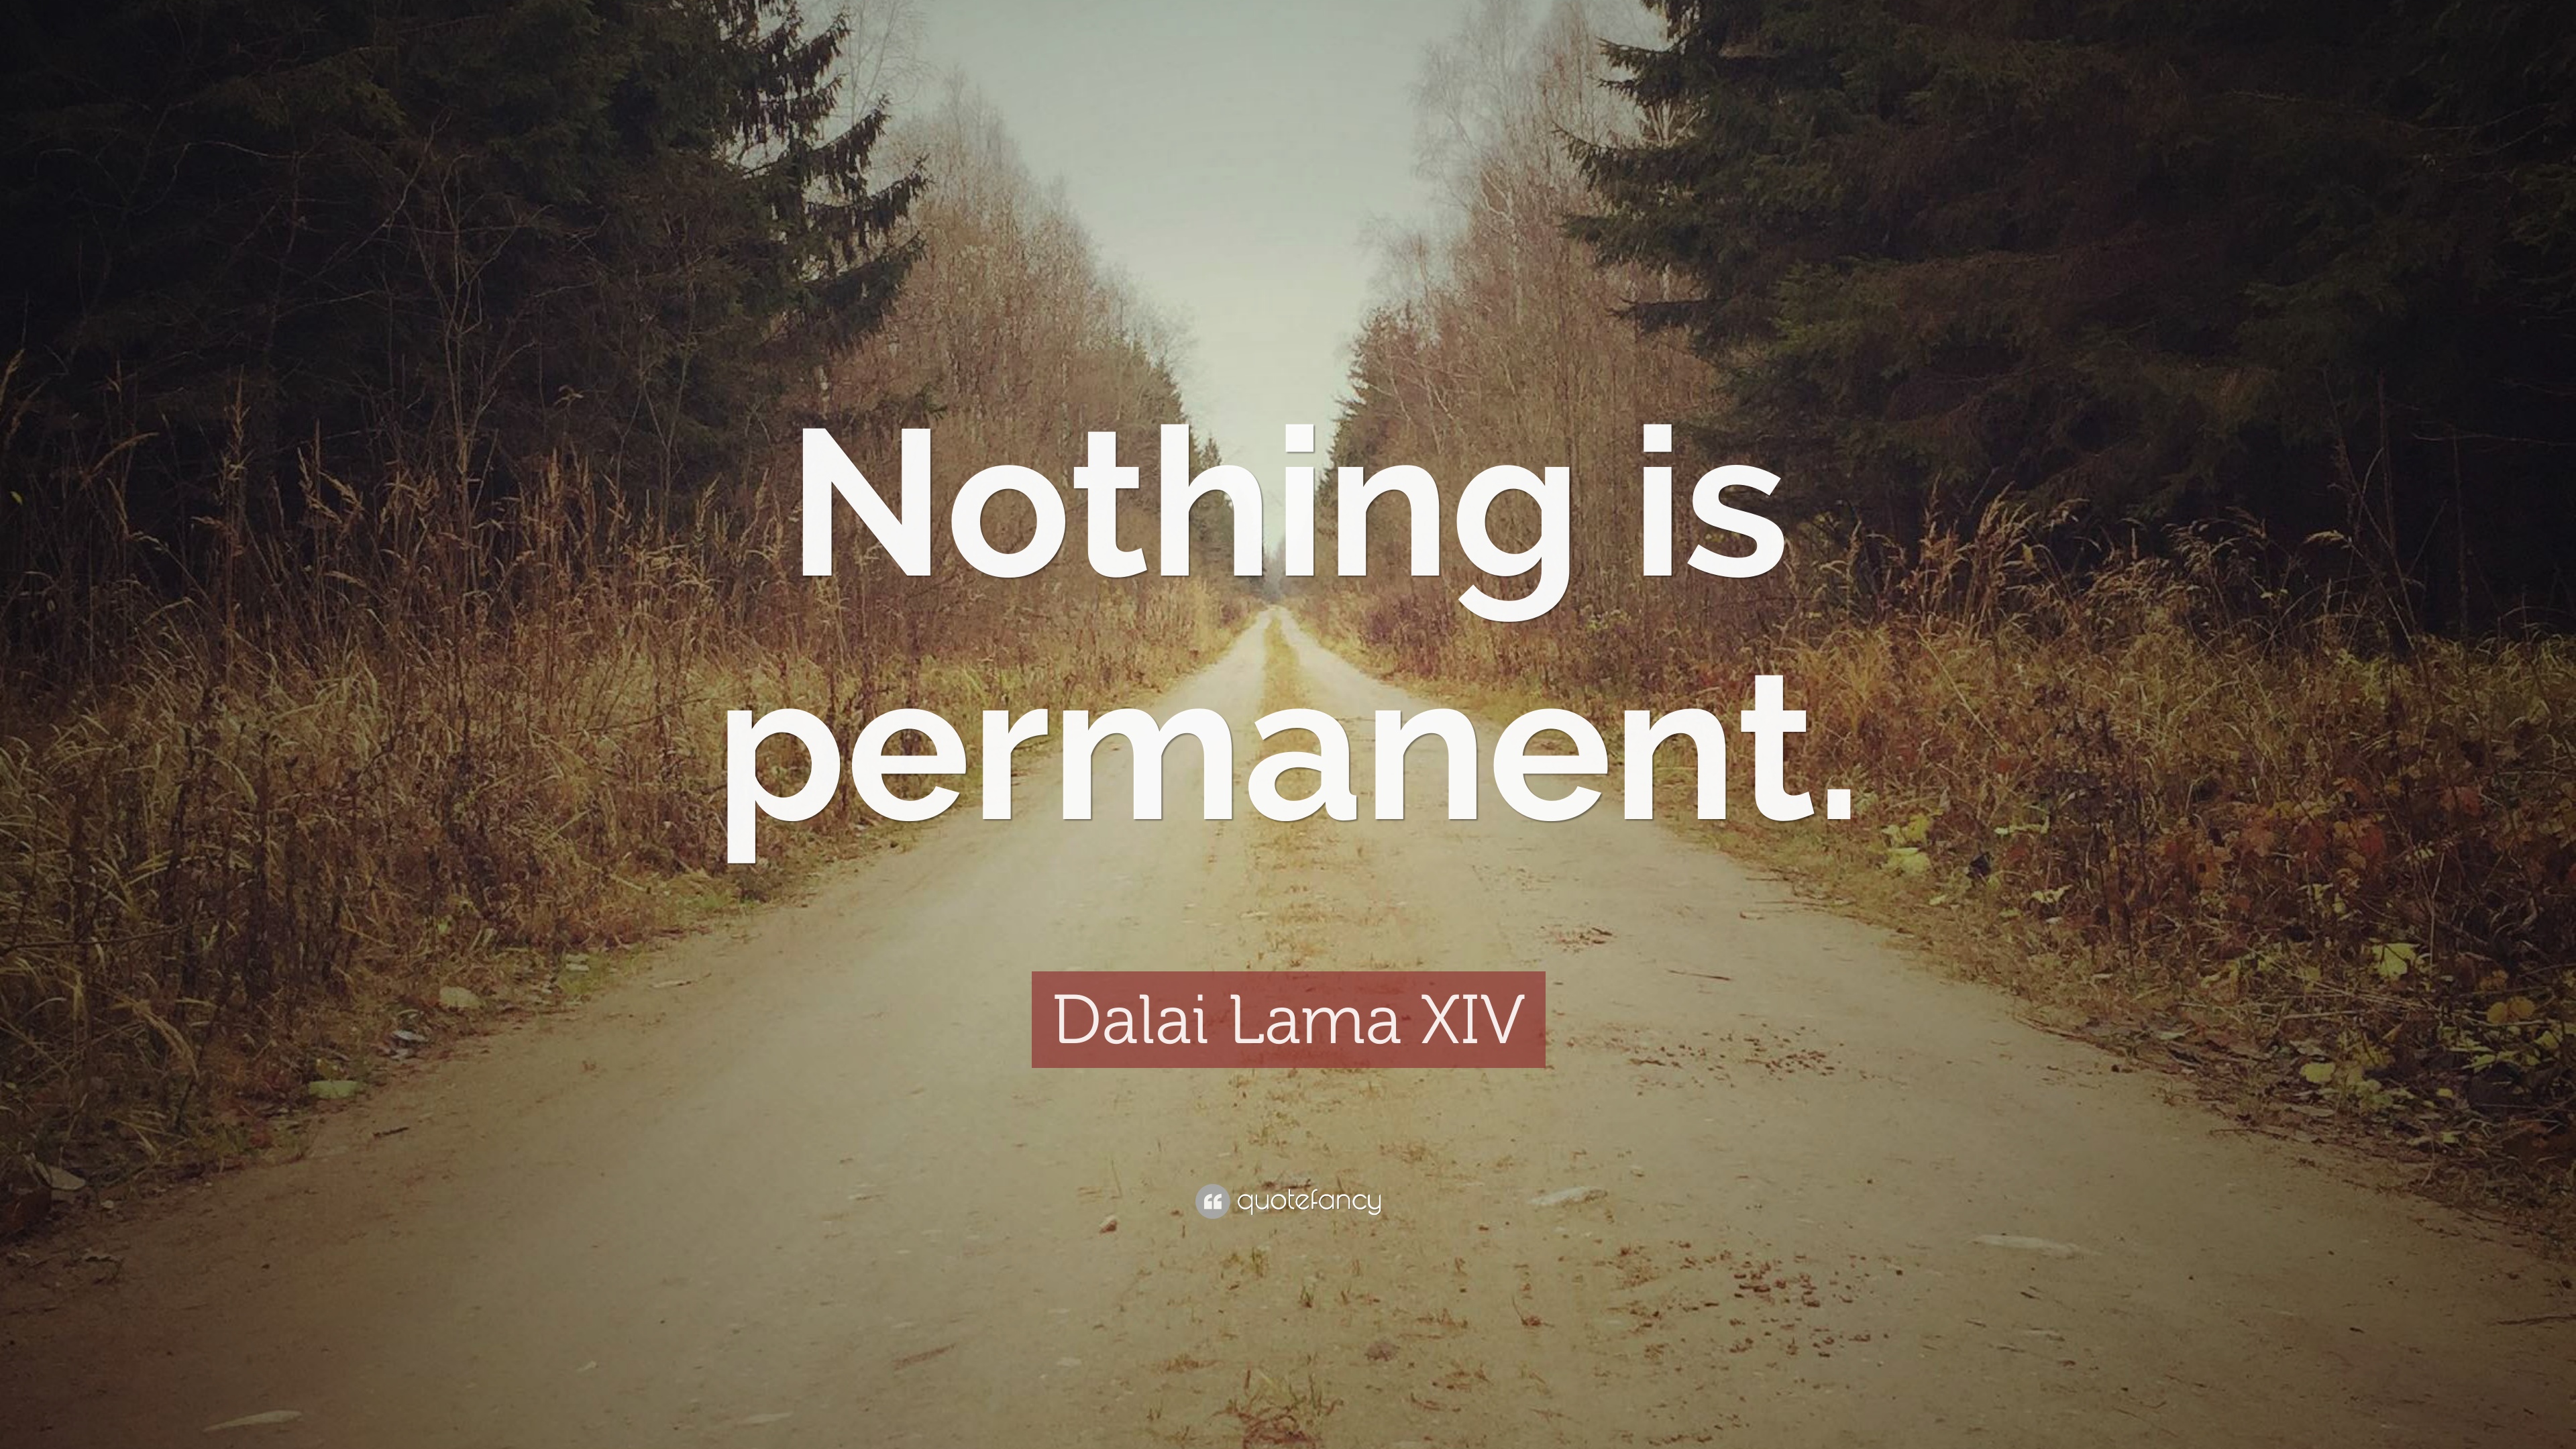 Dalai Lama XIV Quote: “Nothing is permanent.” 12 wallpaper